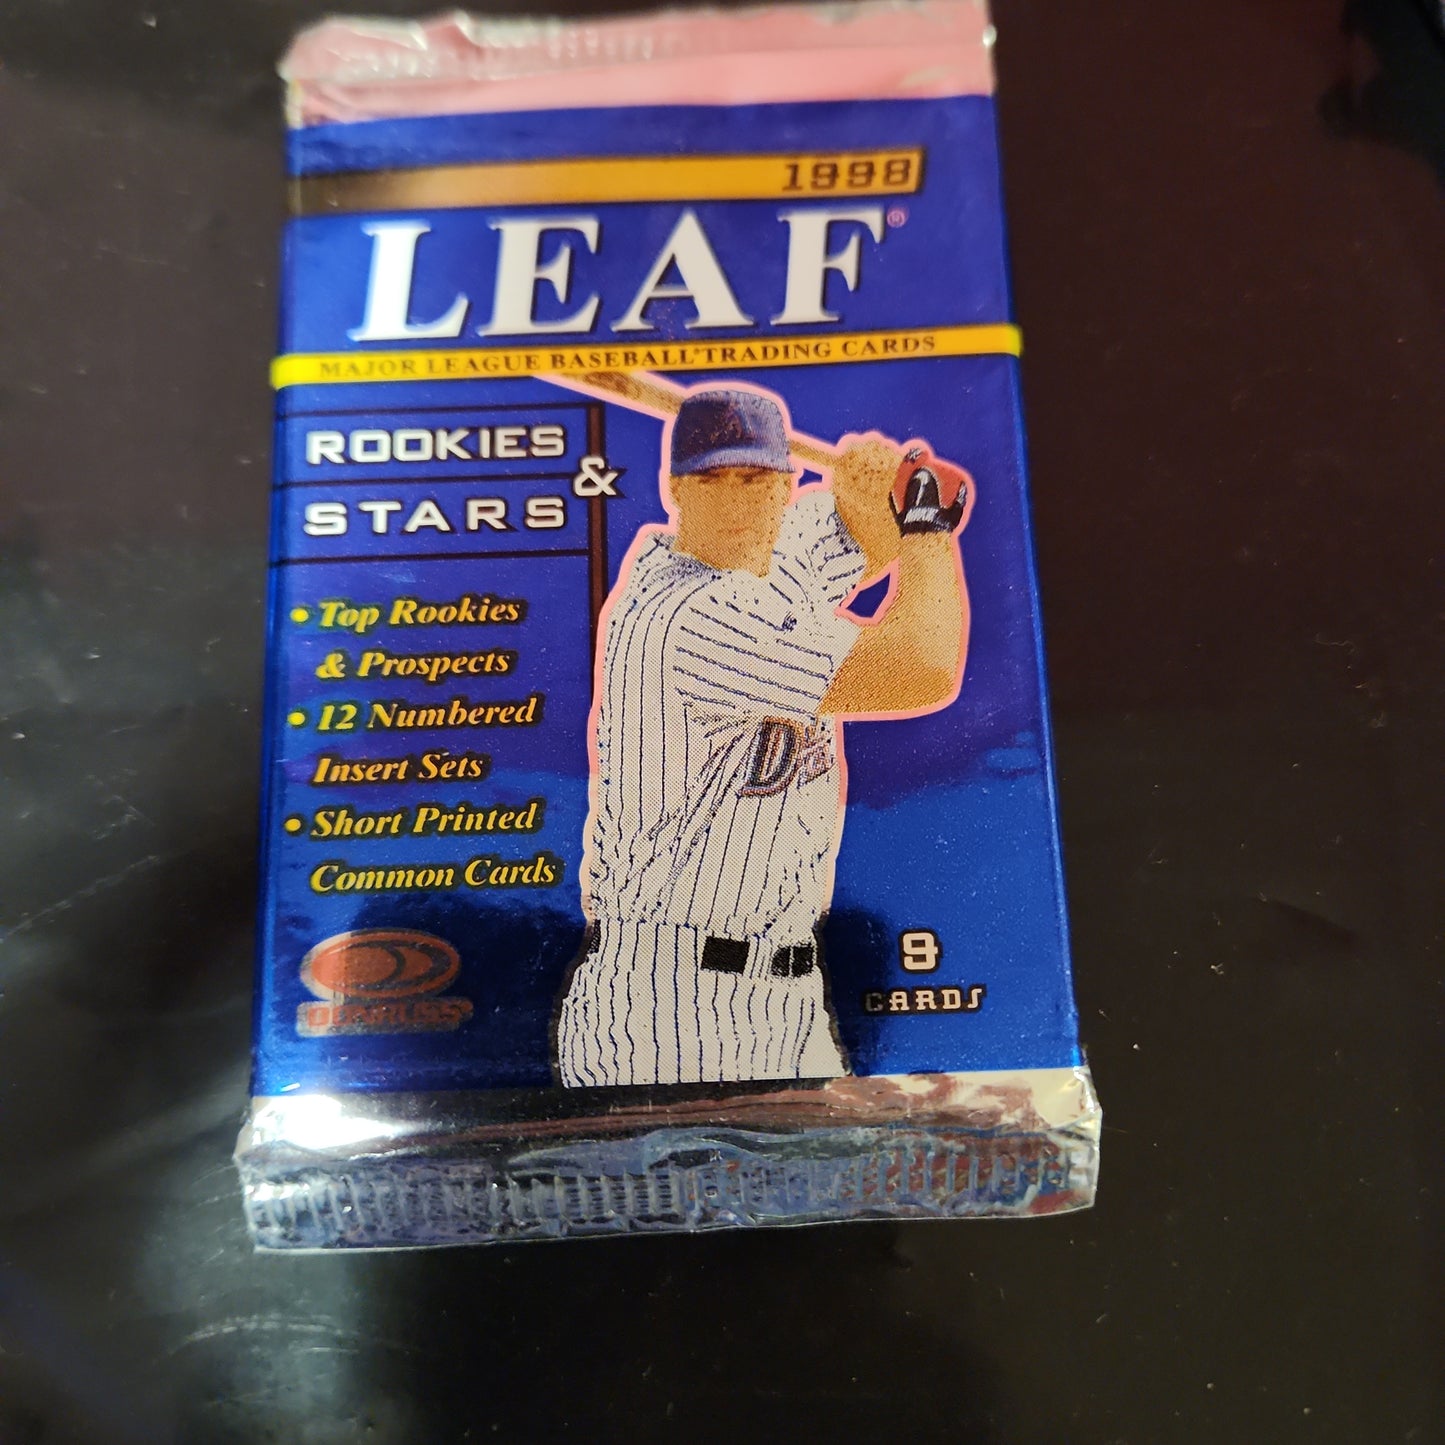 (1) ONE 1998 LEAF ROOKIES & STARS BASEBALL HOBBY PACK - David Ortiz? Griffey? MLB Cards